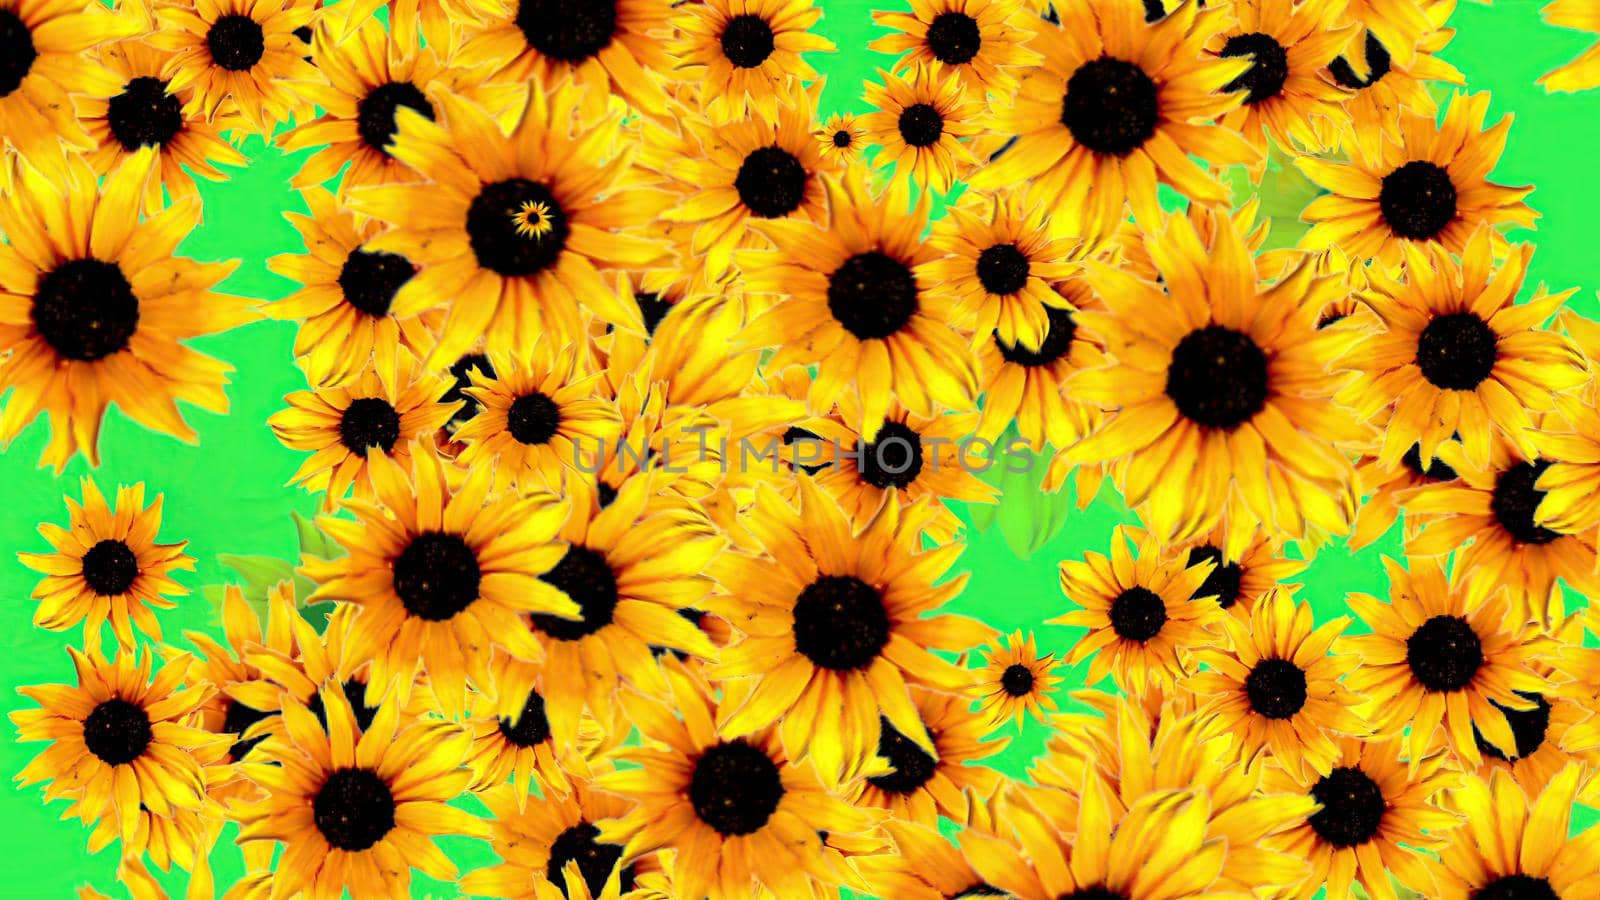 3d illustration - Sunflowers background pattern on green screen 